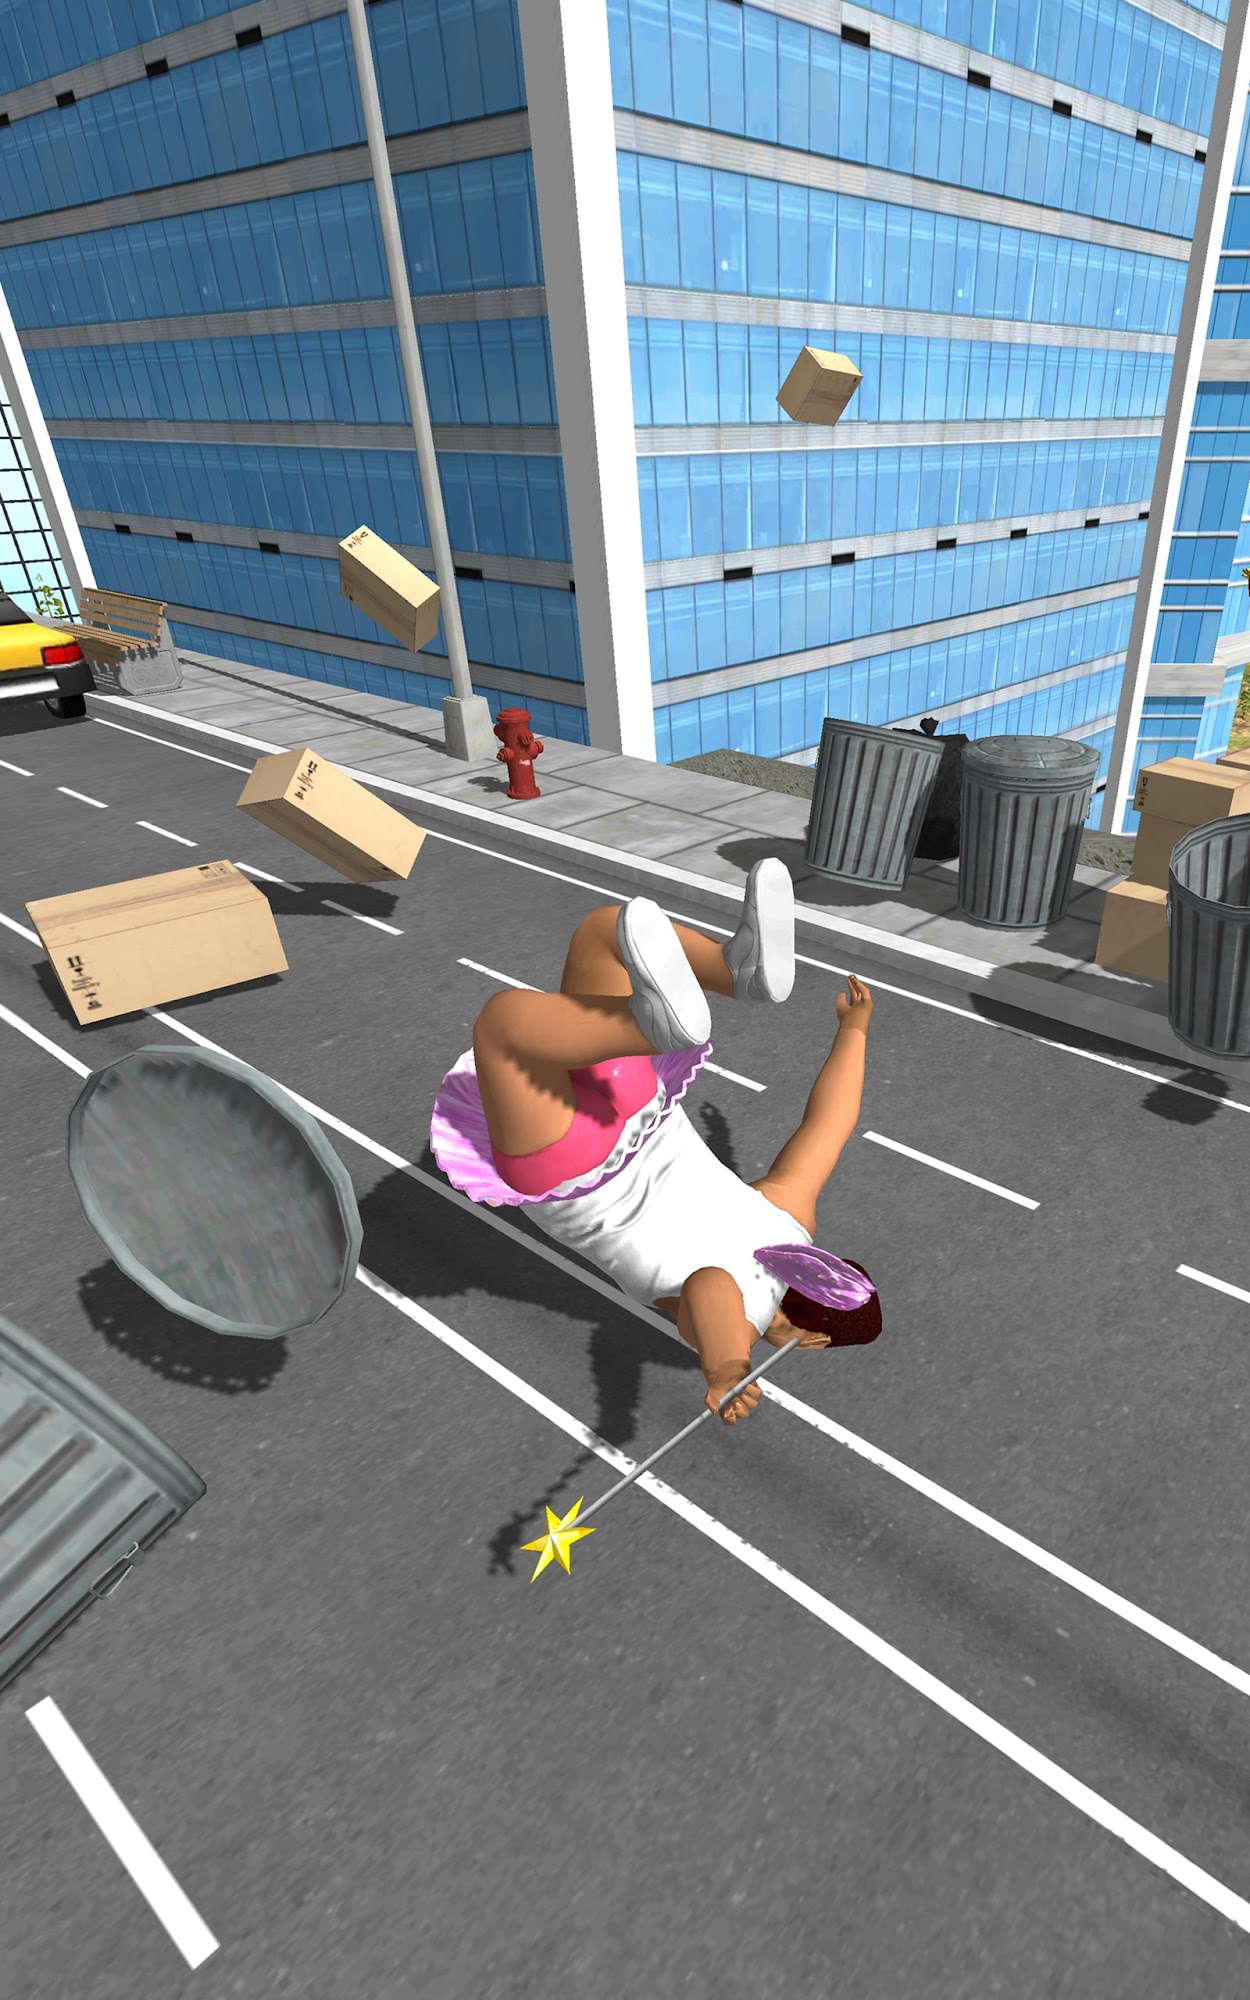 Falling Art Ragdoll Simulator for Android